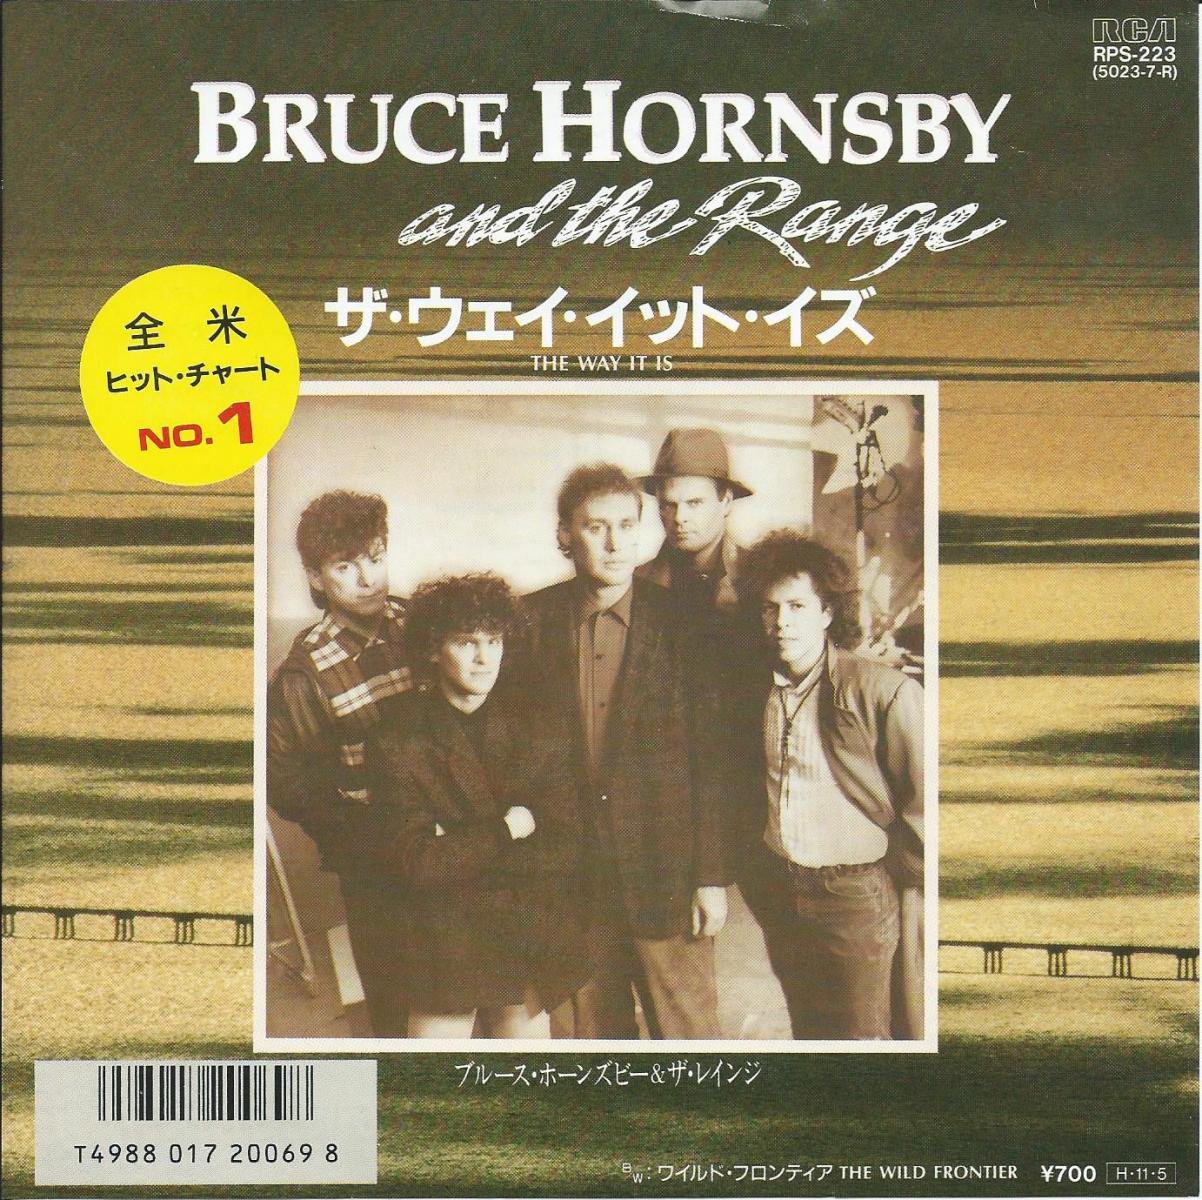 BRUCE HORNSBY & THE RANGE ブルース・ホーンズビー & ザ・レインジ 